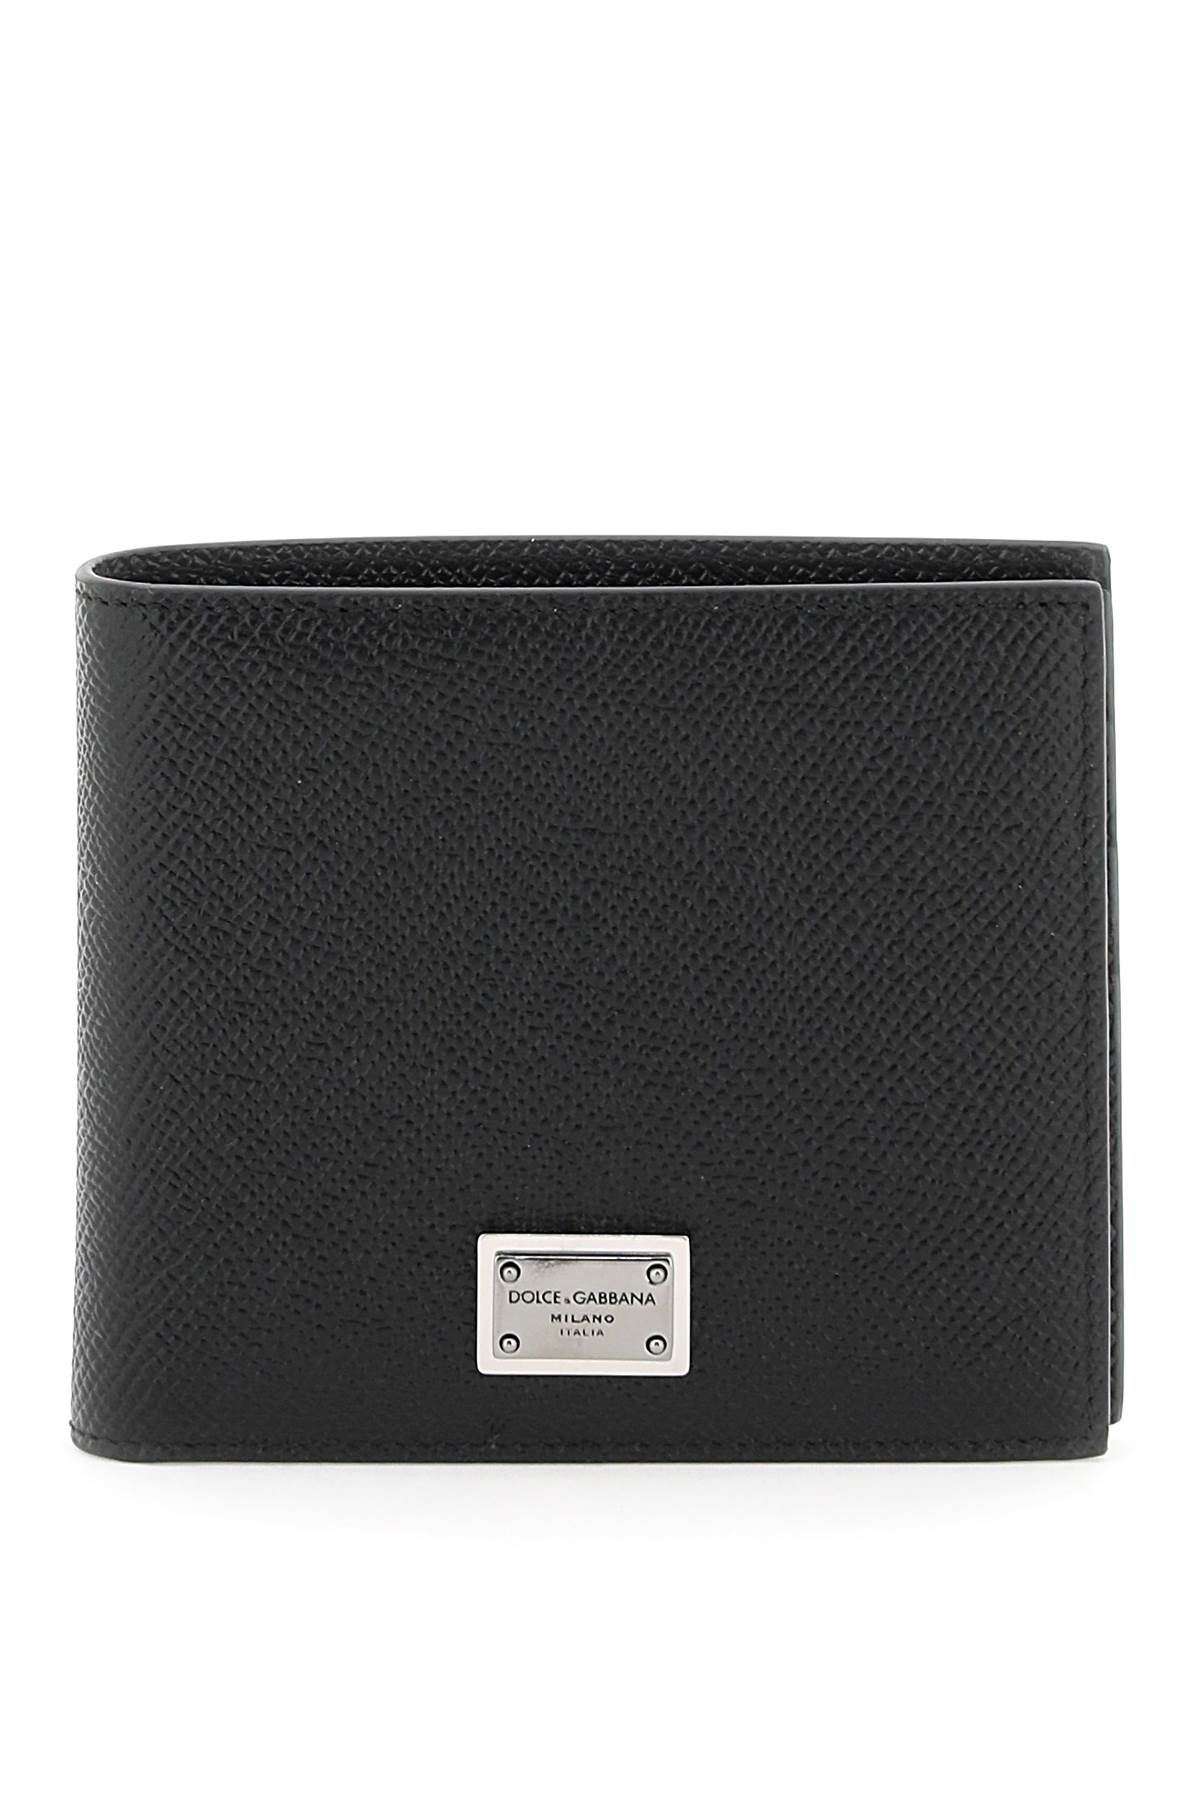 Dolce & Gabbana Leather Wallet In Nero (black)